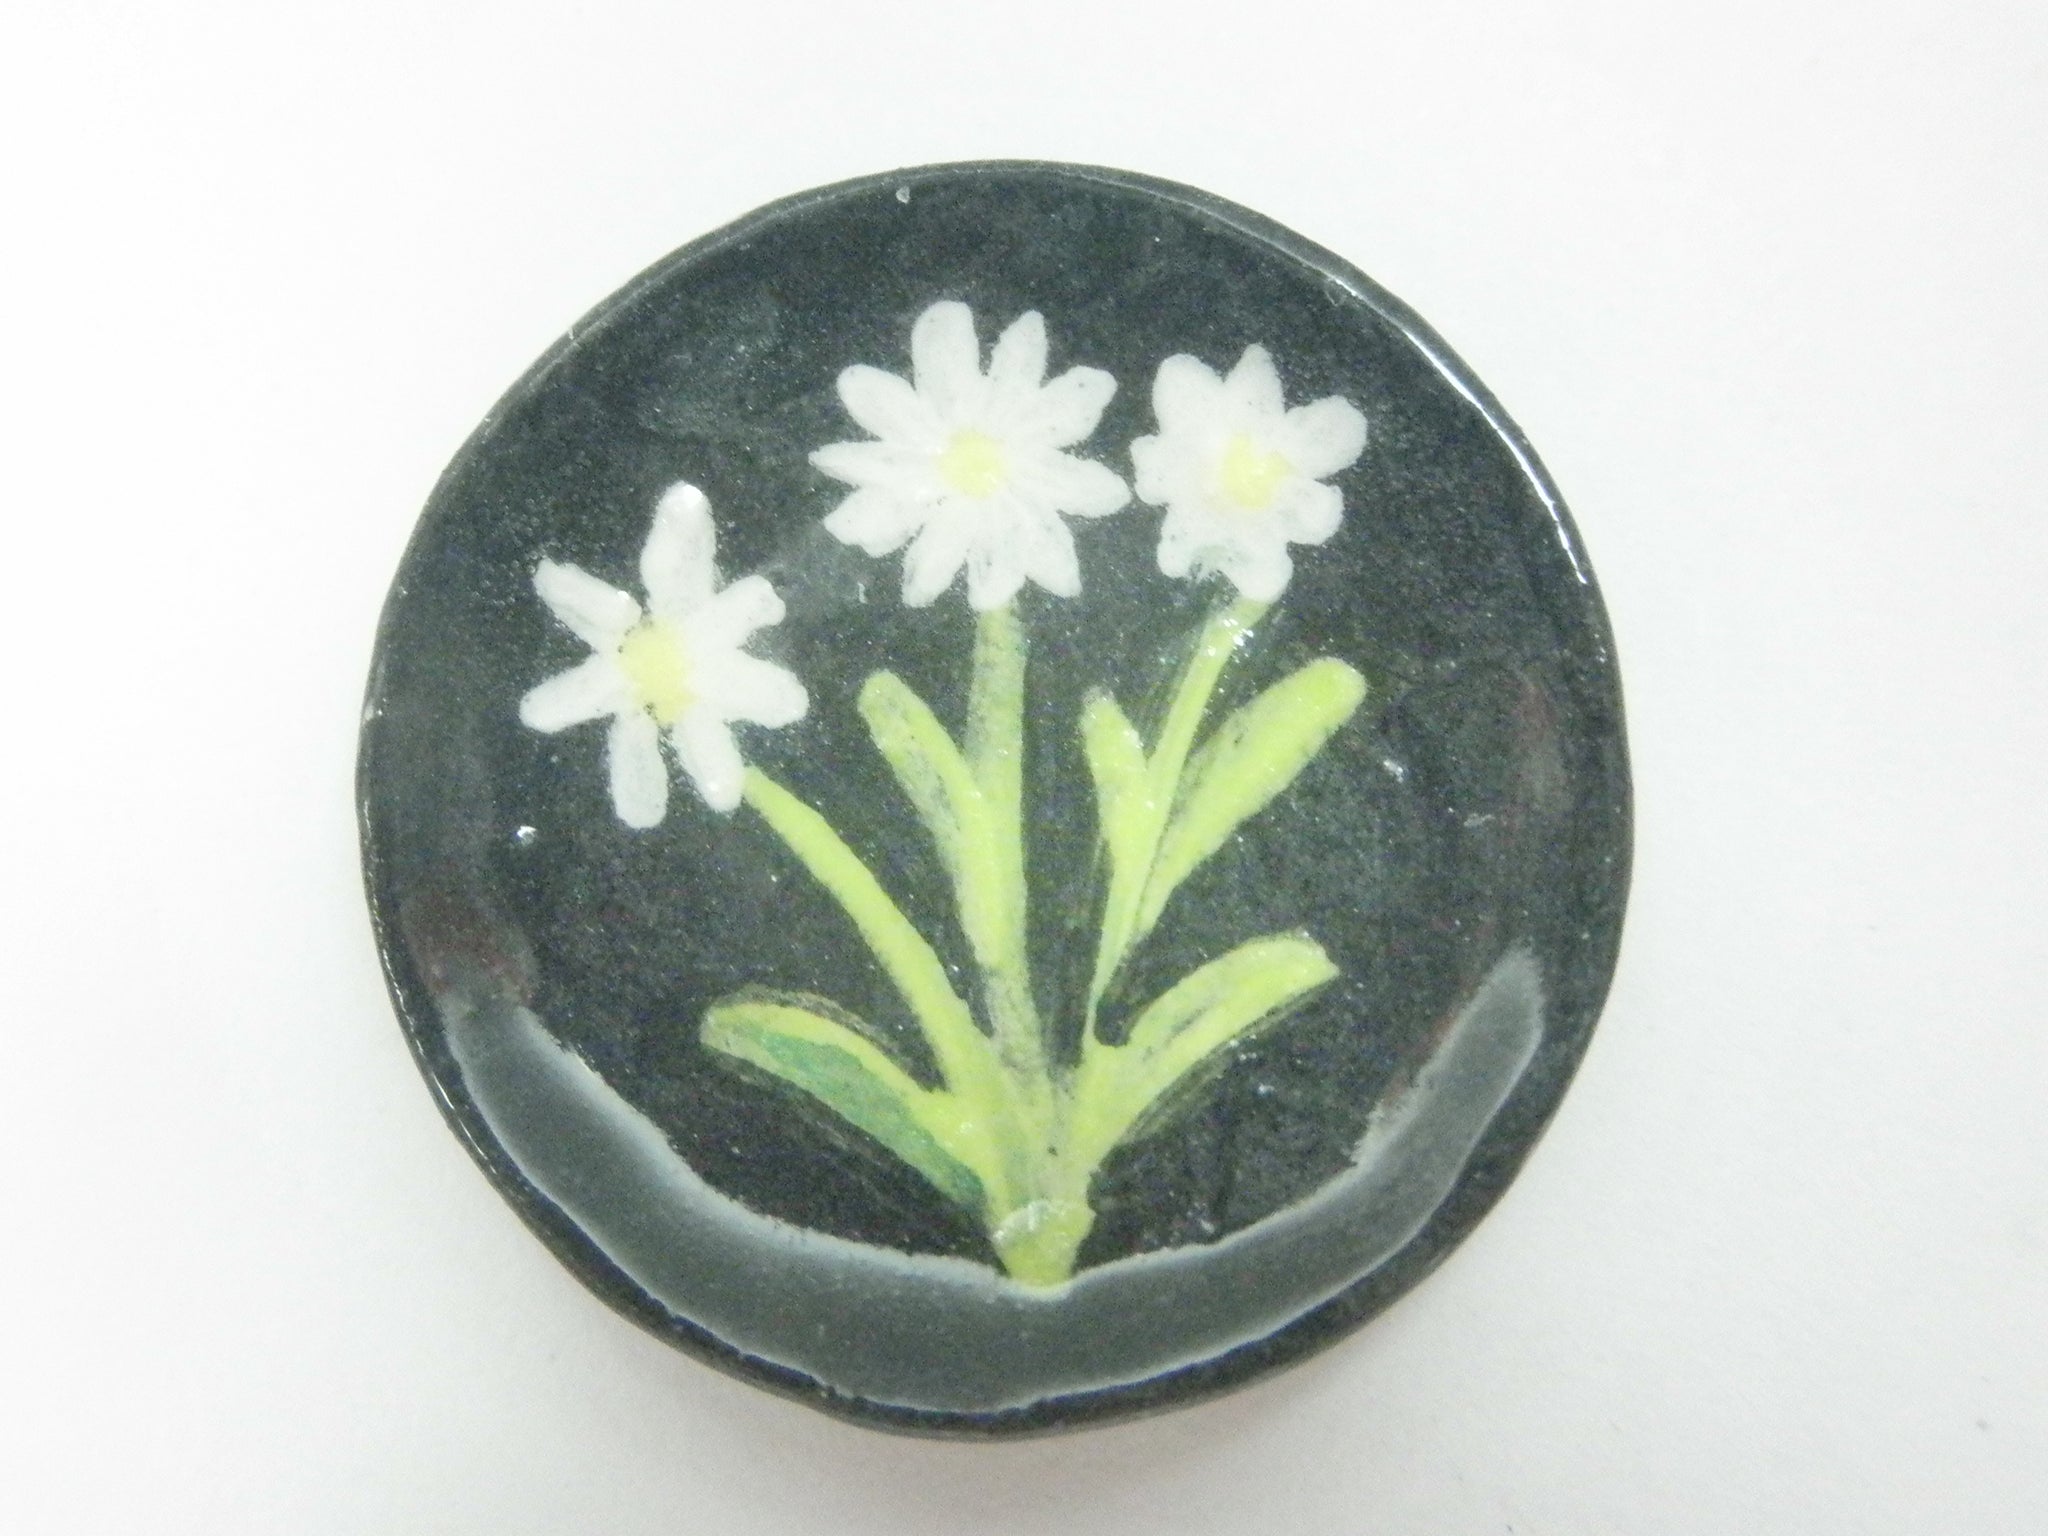 Miniature ceramic plate - 3 Daisies on black